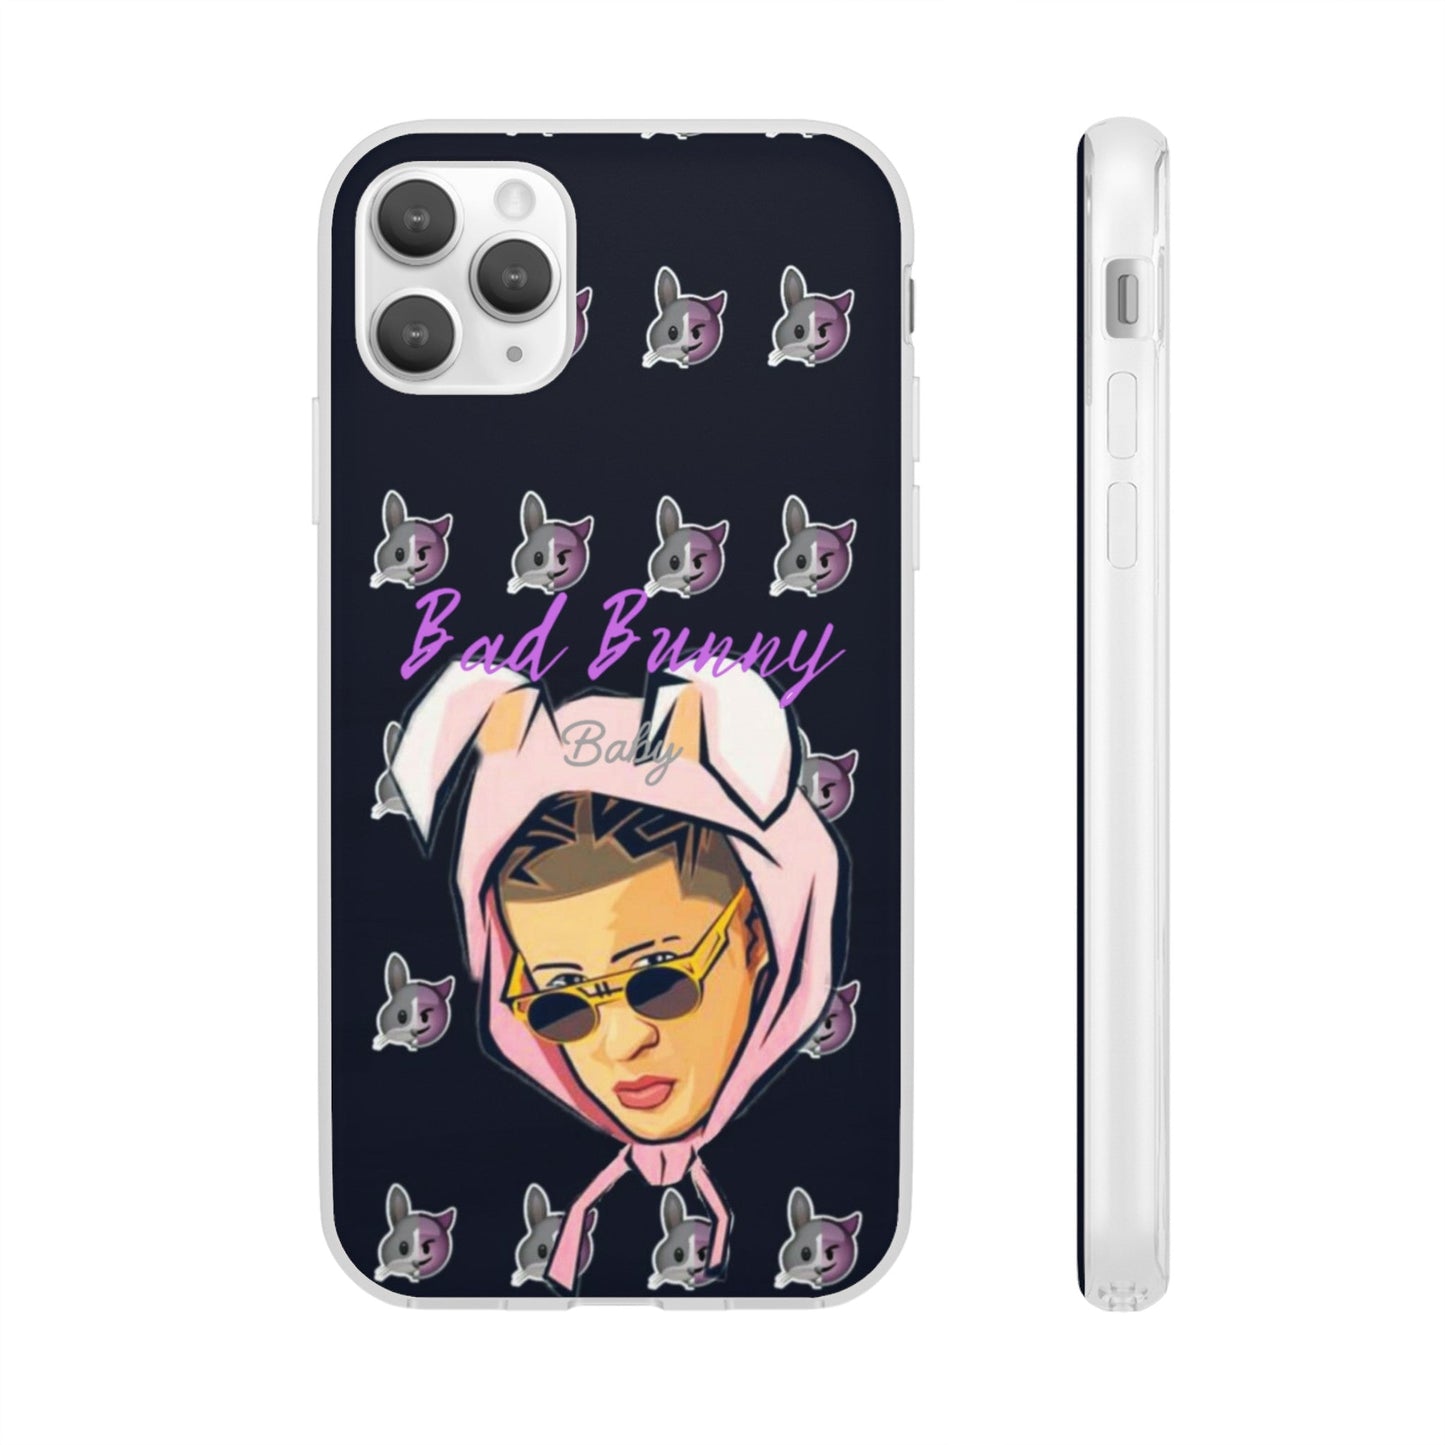 Bad Bunny iPhone Case - Alex's Store - iPhone 11 Pro Max - 